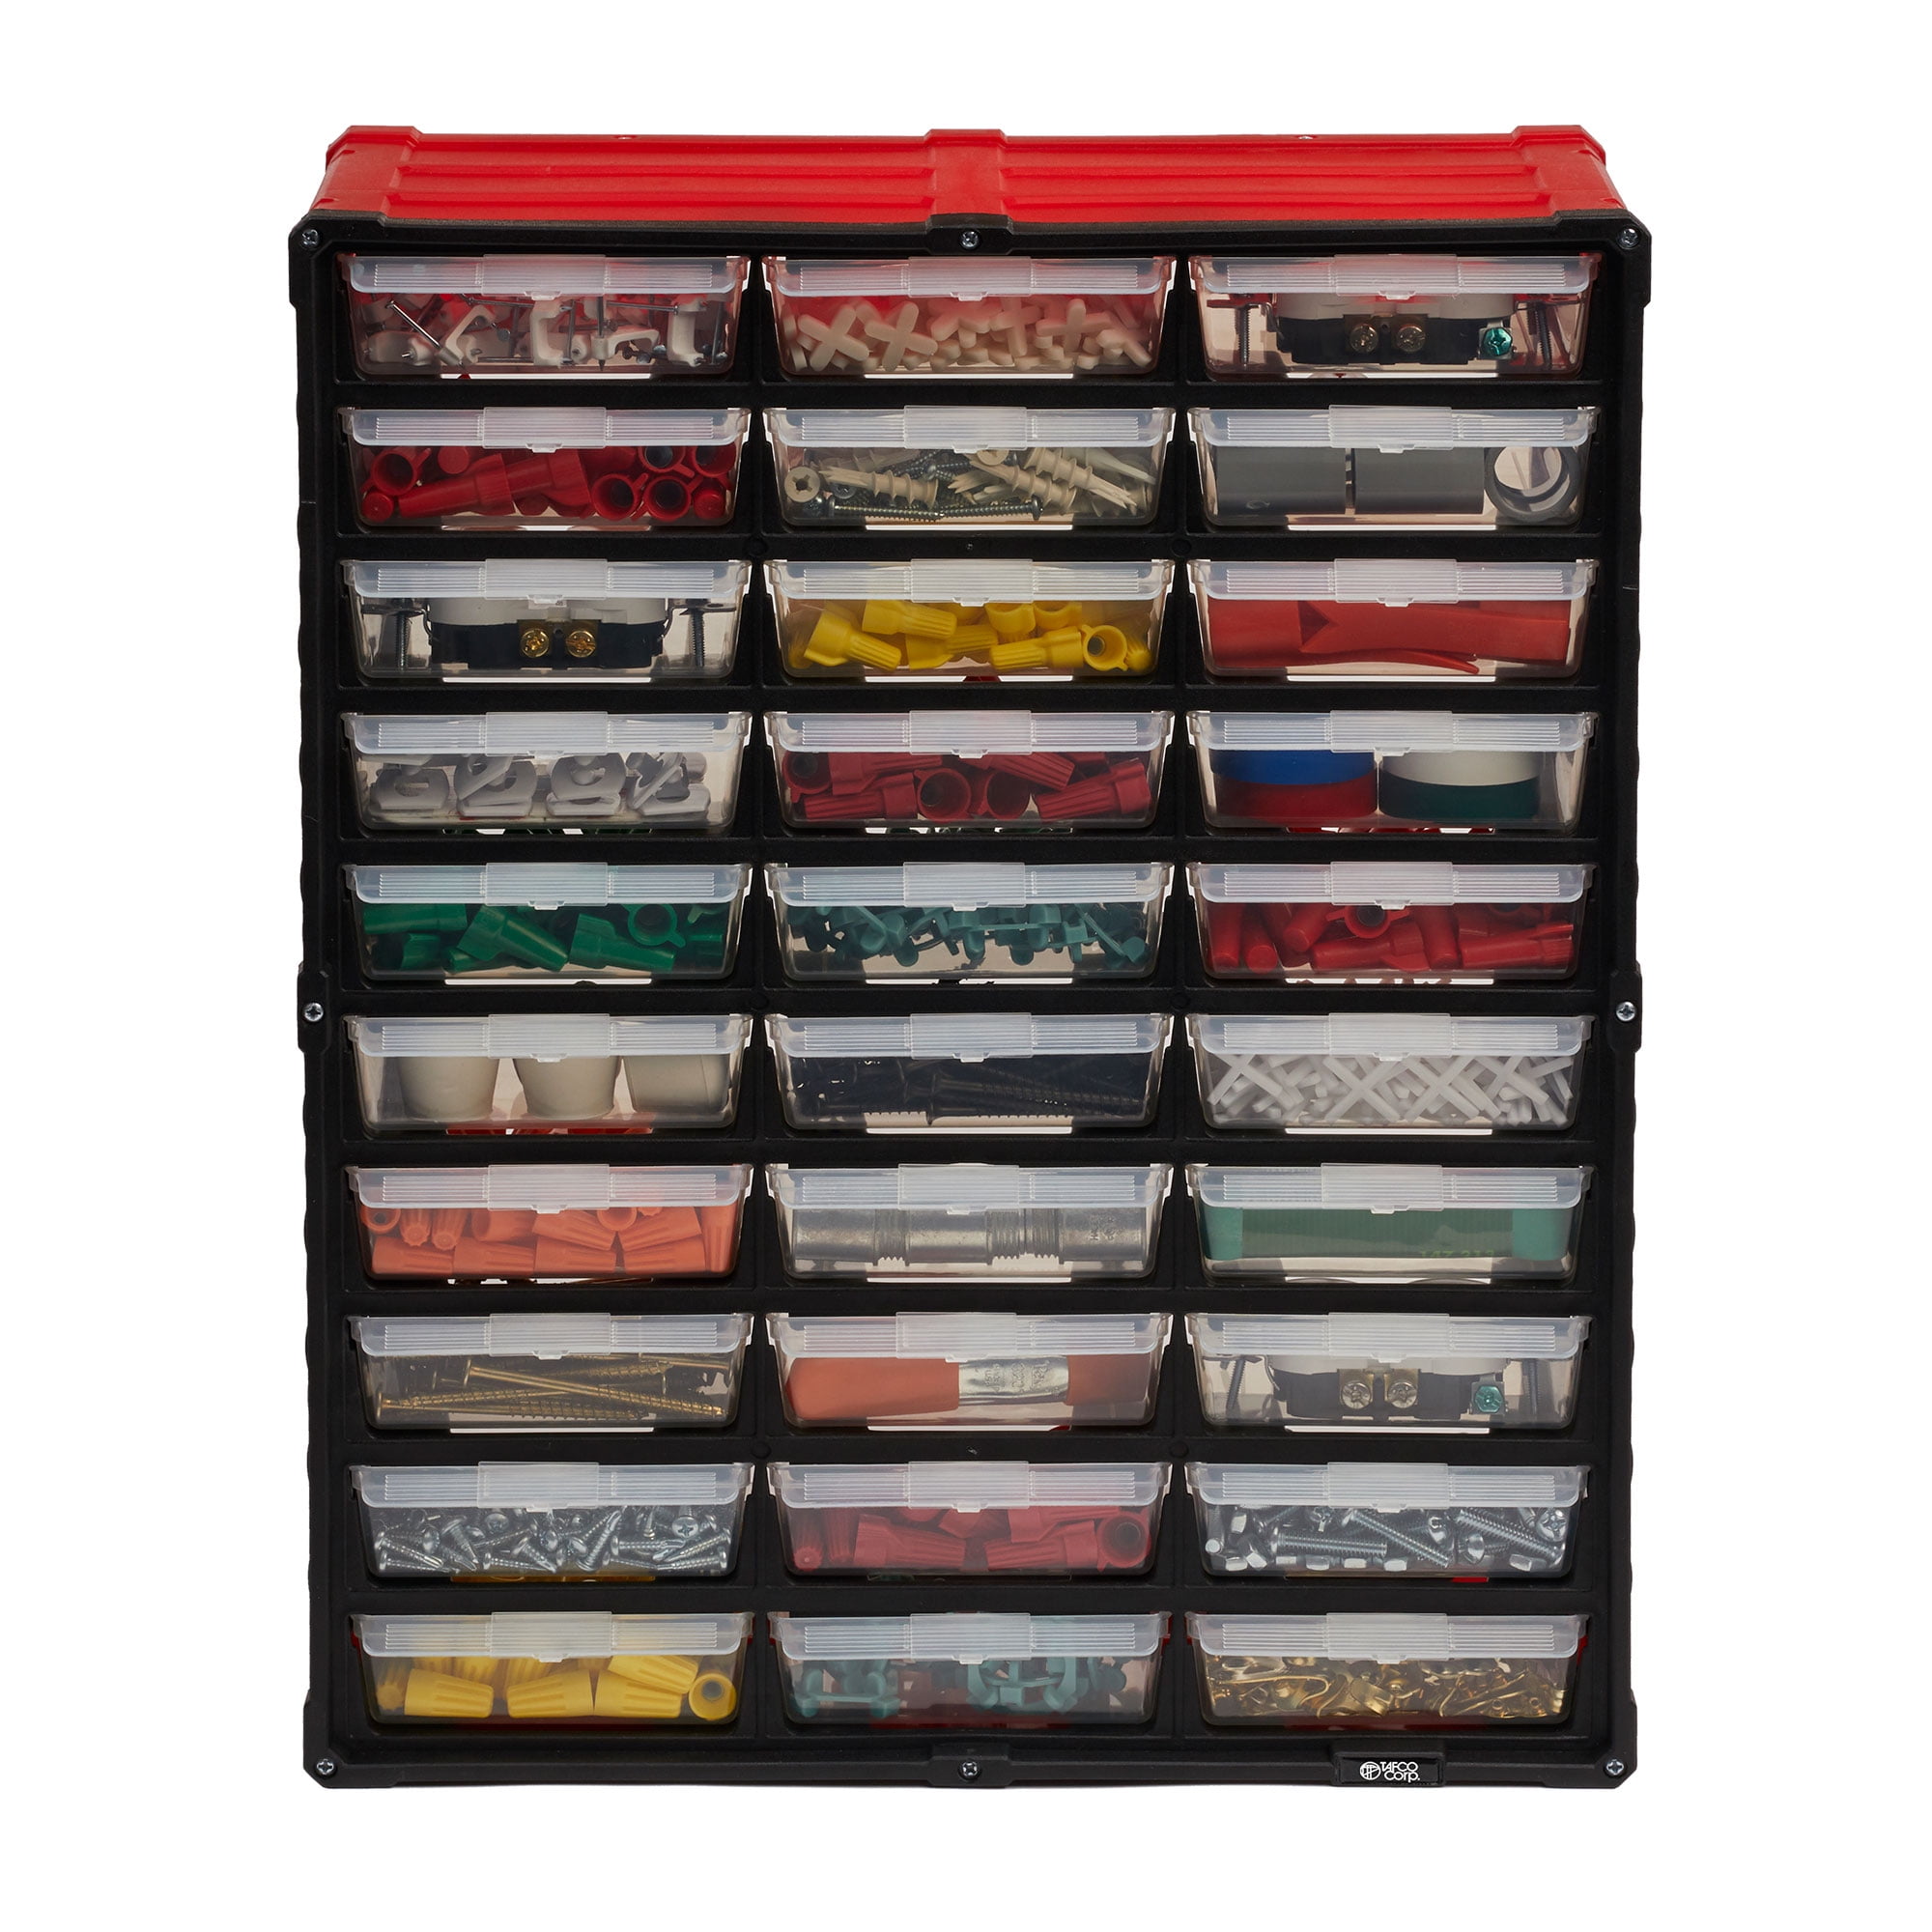 TAFCO 30-Compartment Small Parts Organizer, Red